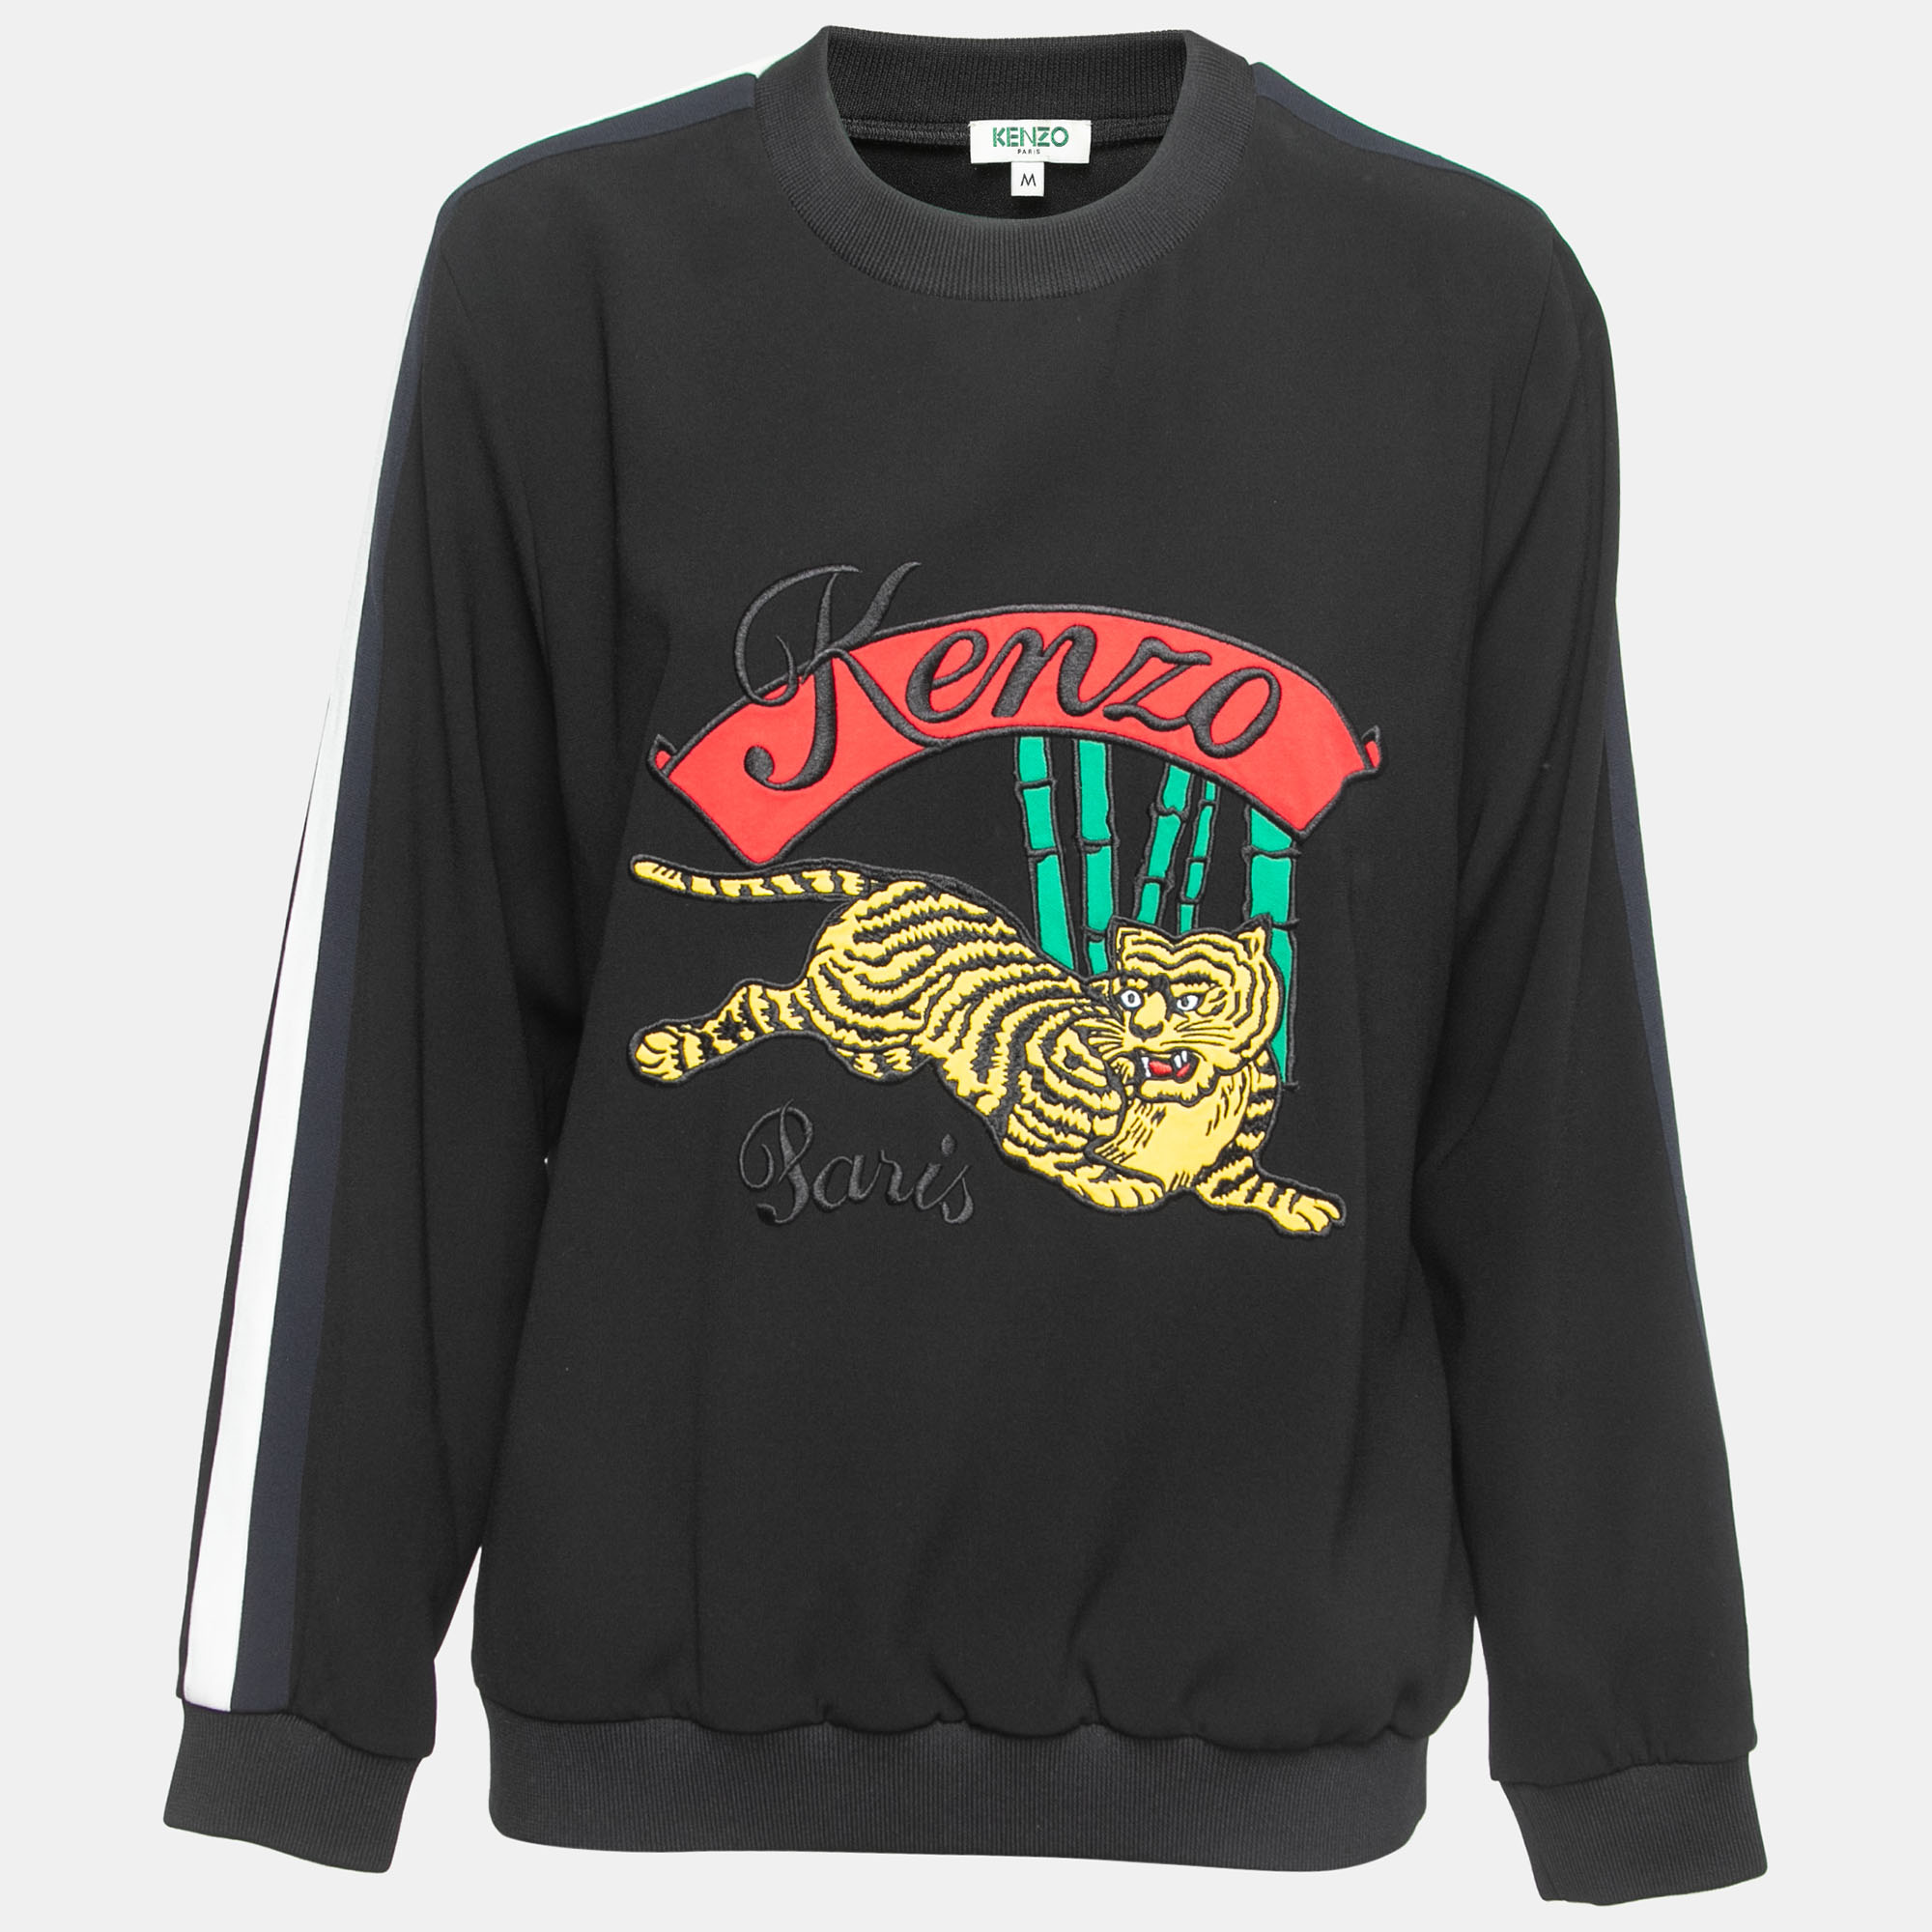 Kenzo Black Crepe Tiger Embroidered Sweatshirt M